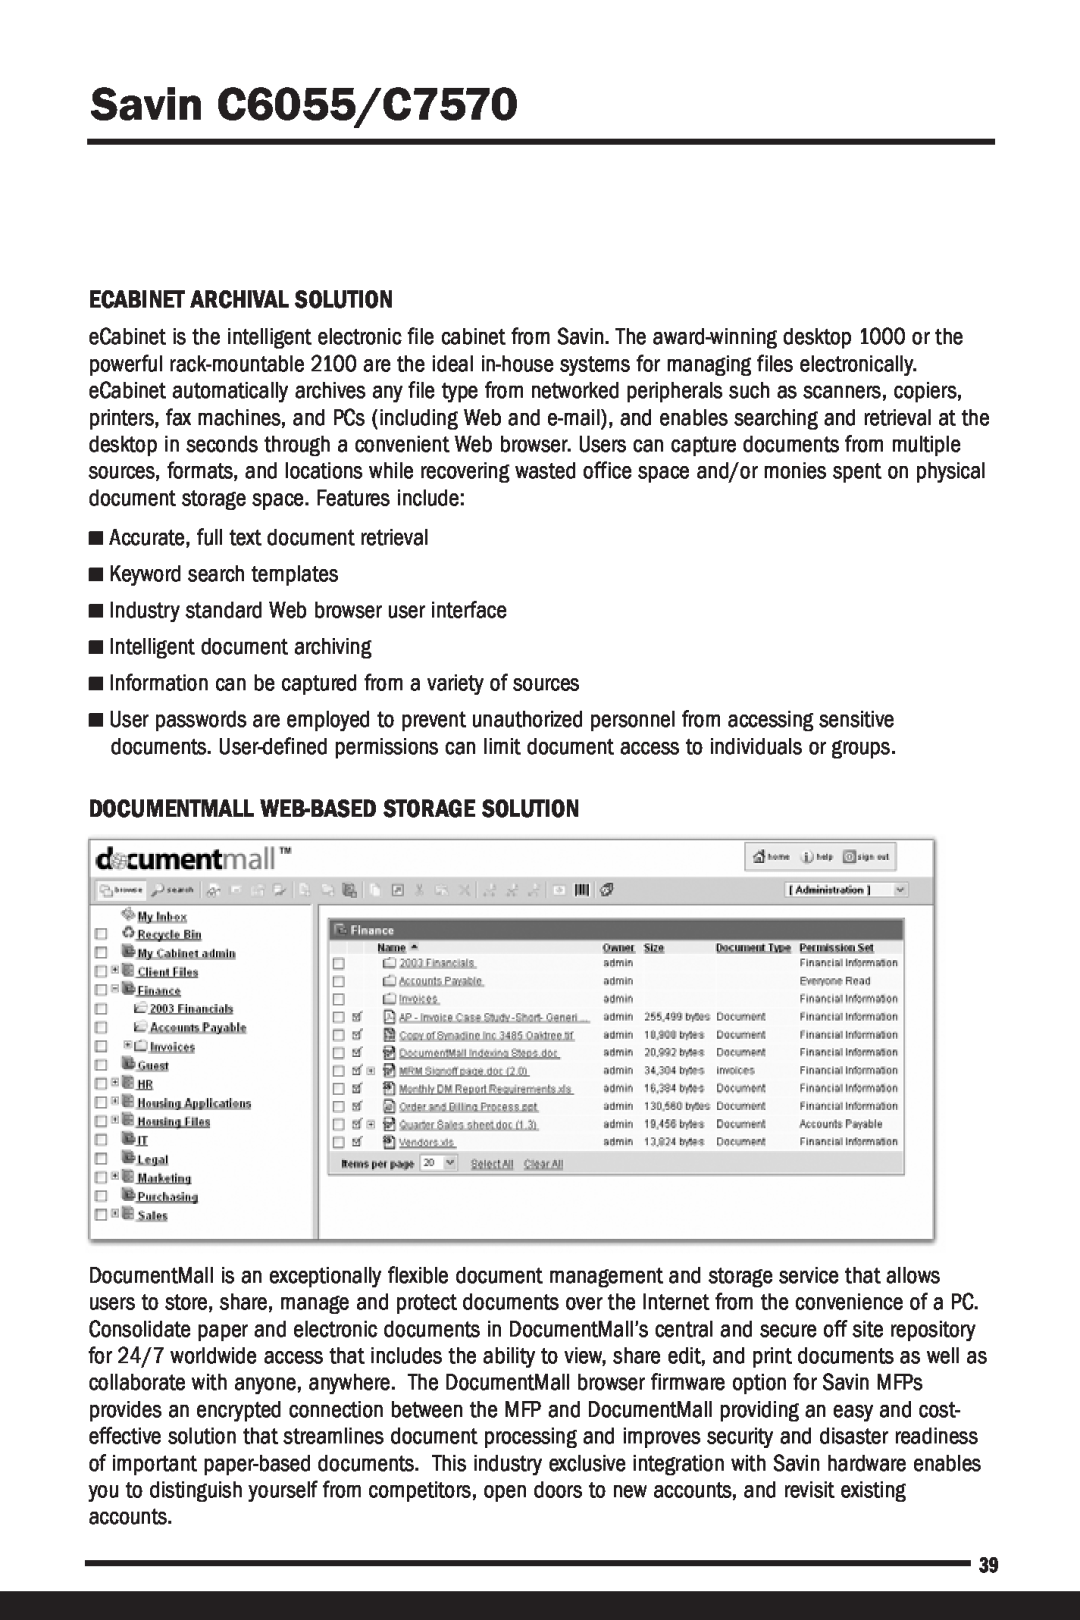 Savin manual Ecabinet Archival Solution, Documentmall Web-Based Storage Solution, Savin C6055/C7570 